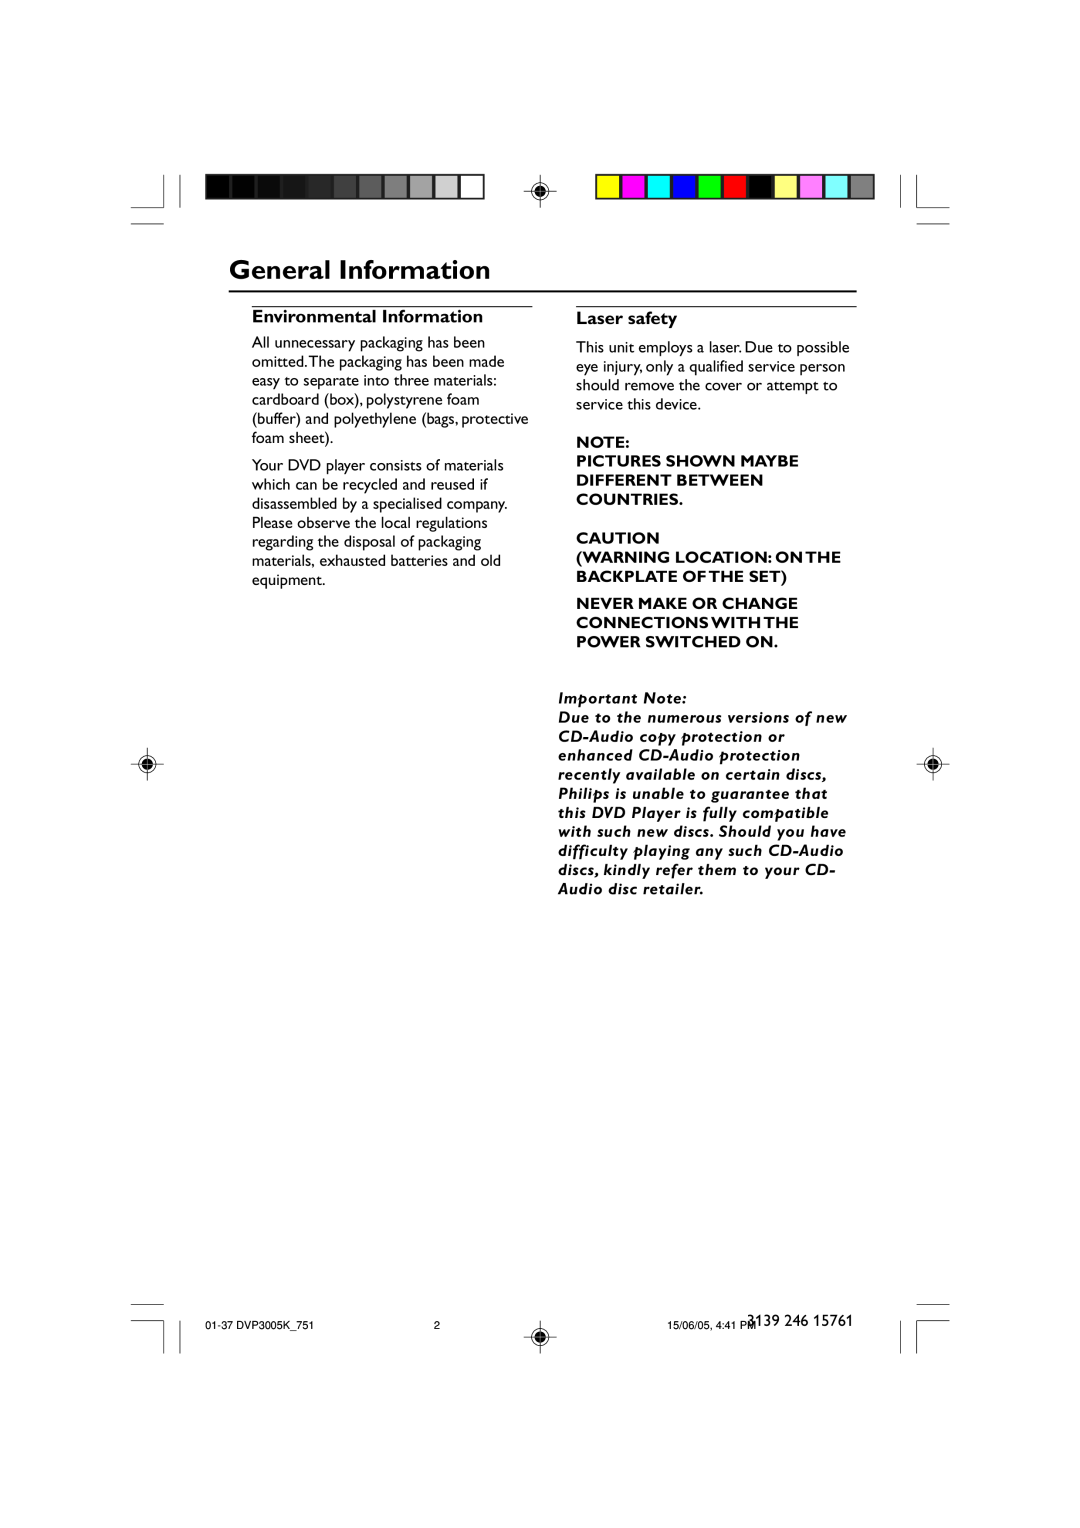 Philips DVP3005K/74 user manual General Information, Environmental Information, Laser safety, Important Note 